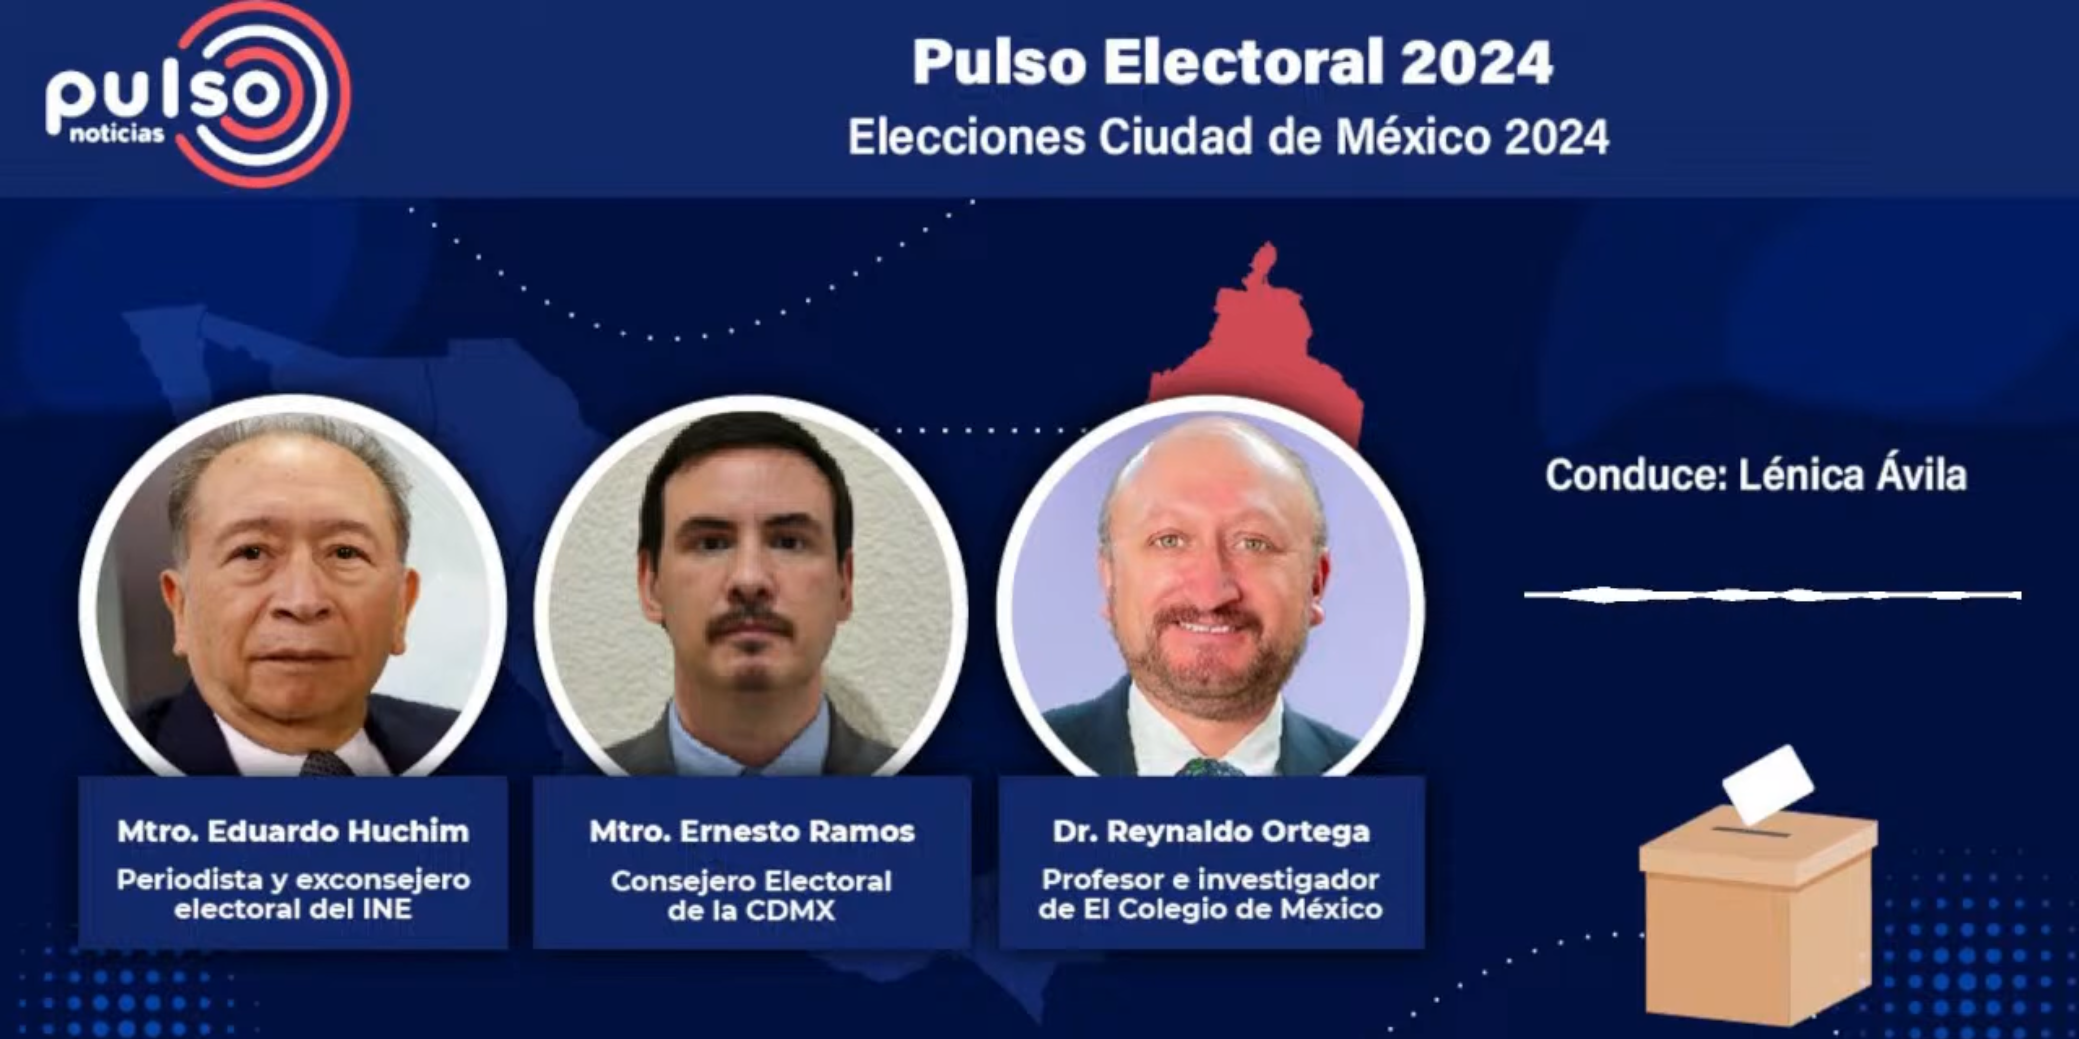 Pulso Electoral 2024: Elections in Mexico City